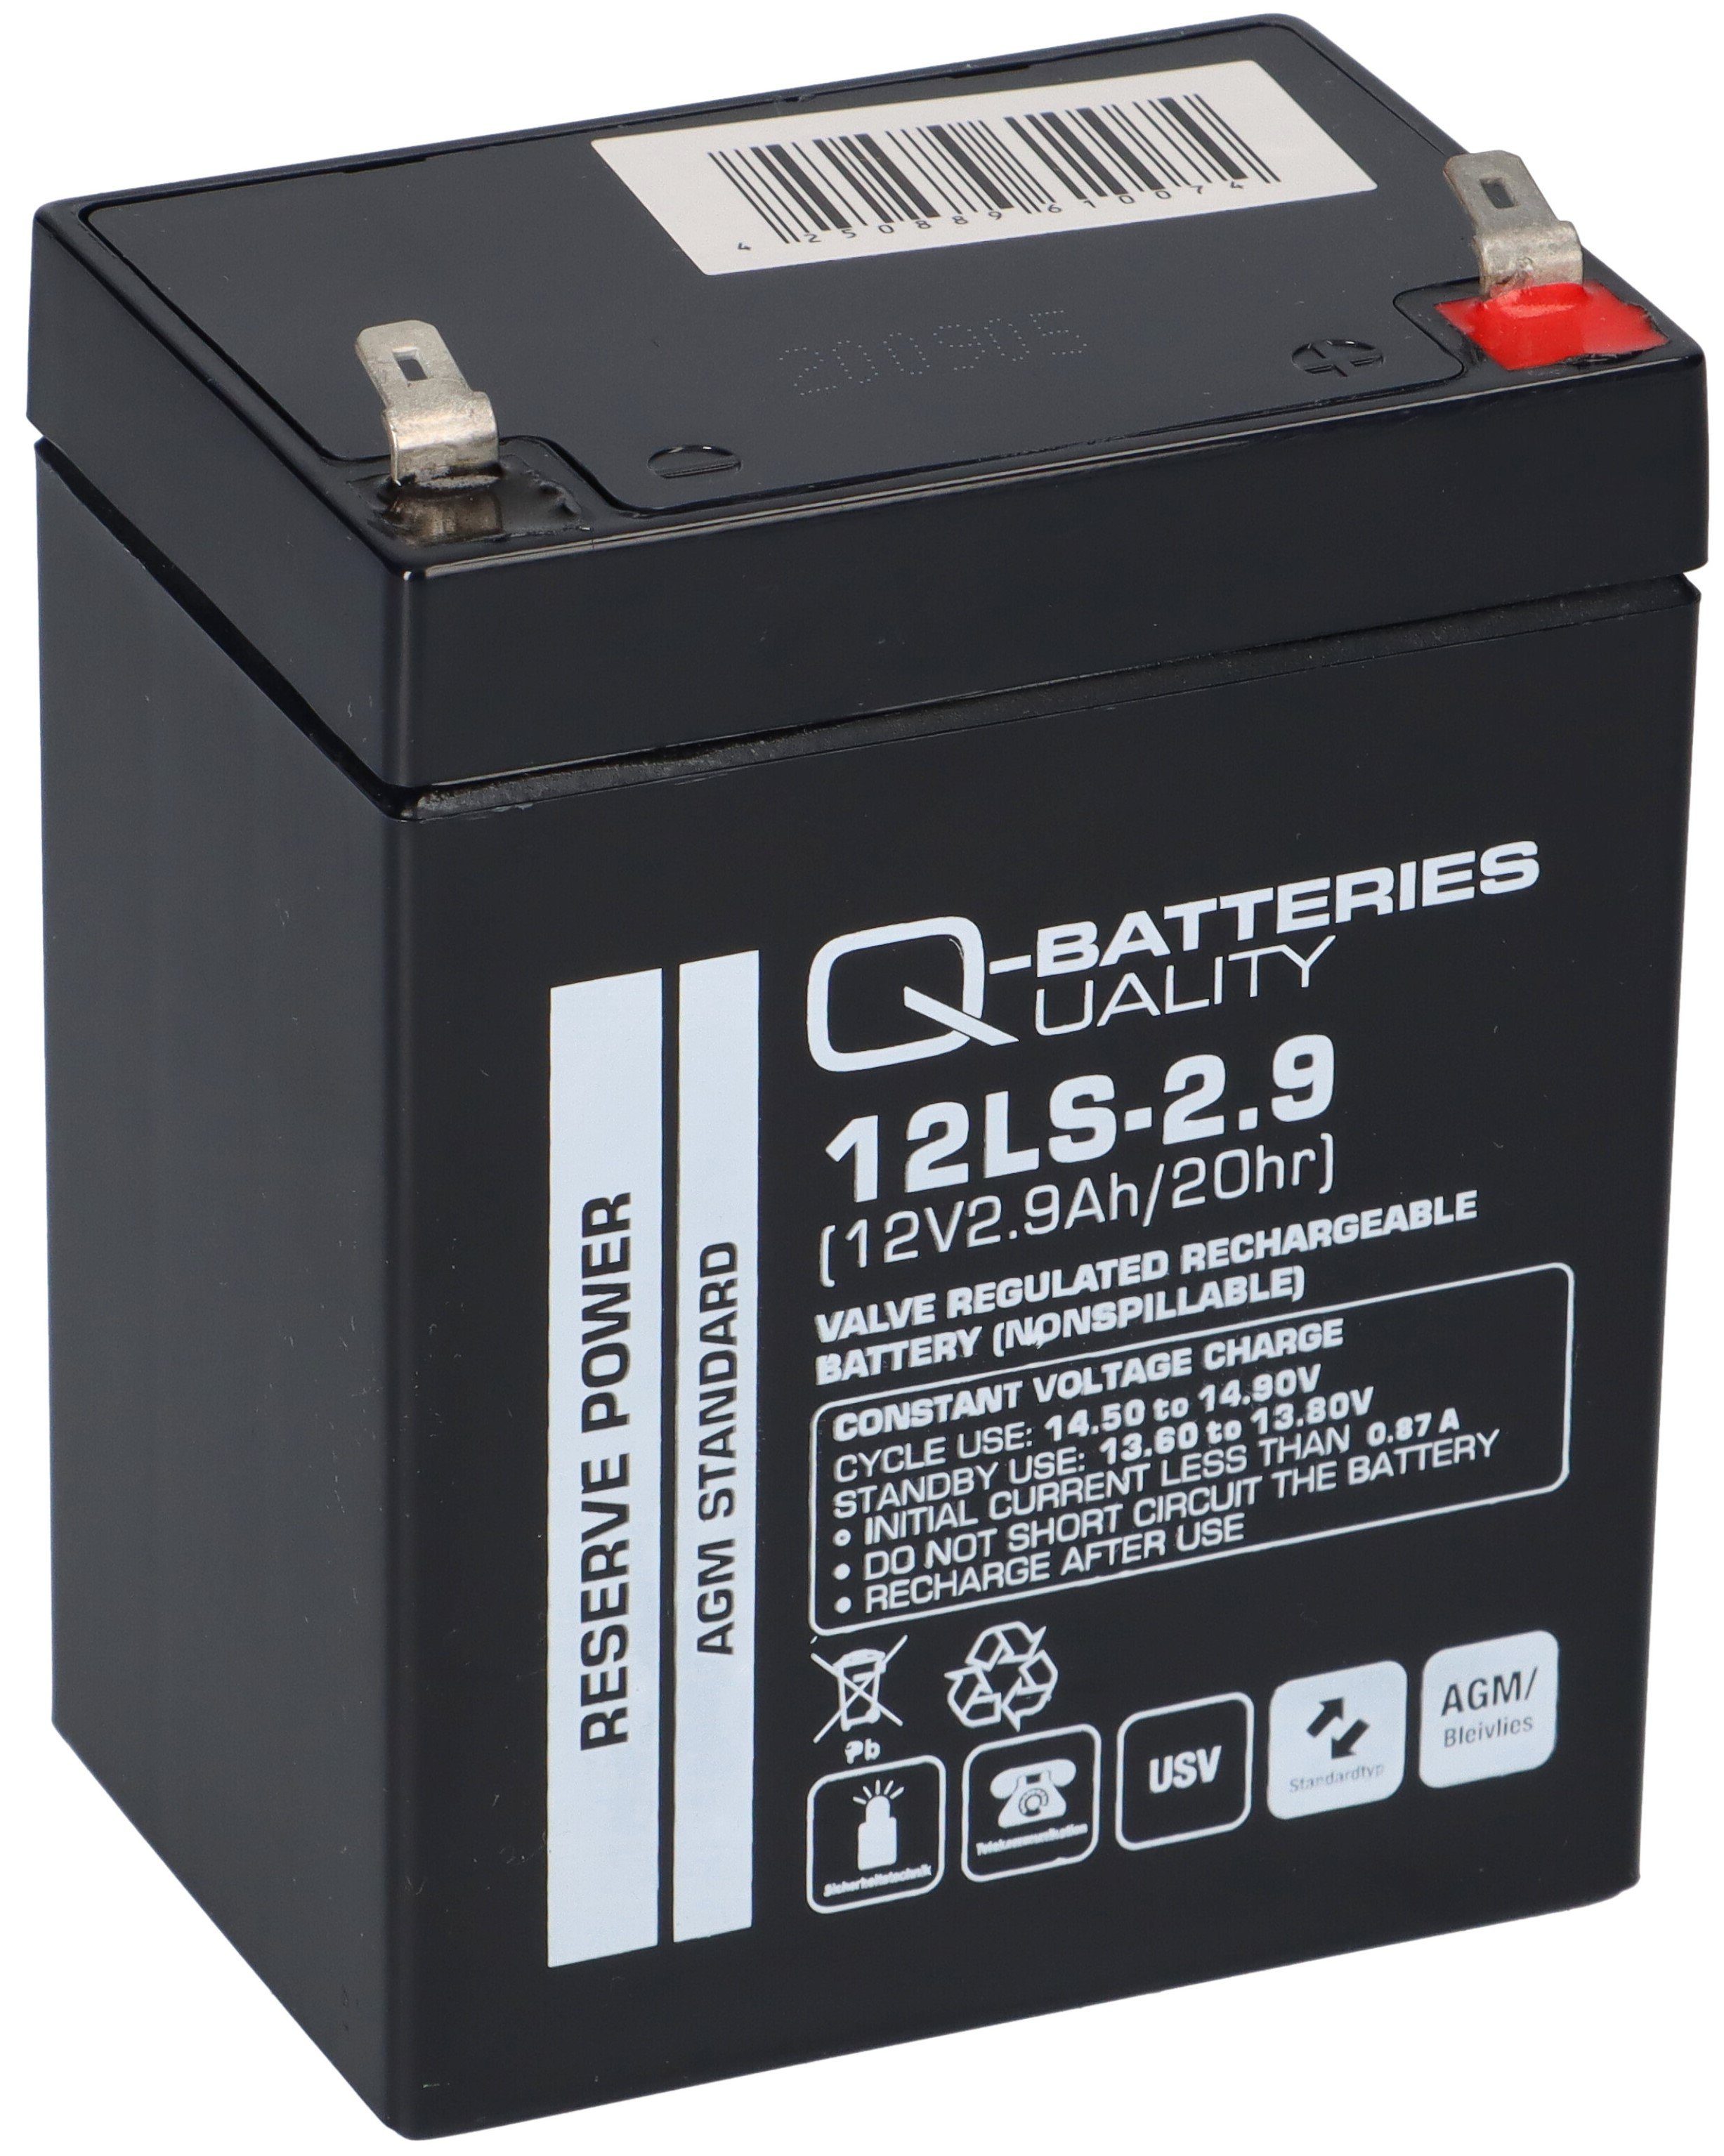 Q-Batteries Q-Batteries 12LS-2.9 12V 2,9Ah Blei-Vlies Akku / AGM VRLA Bleiakkus | Bleiakkus